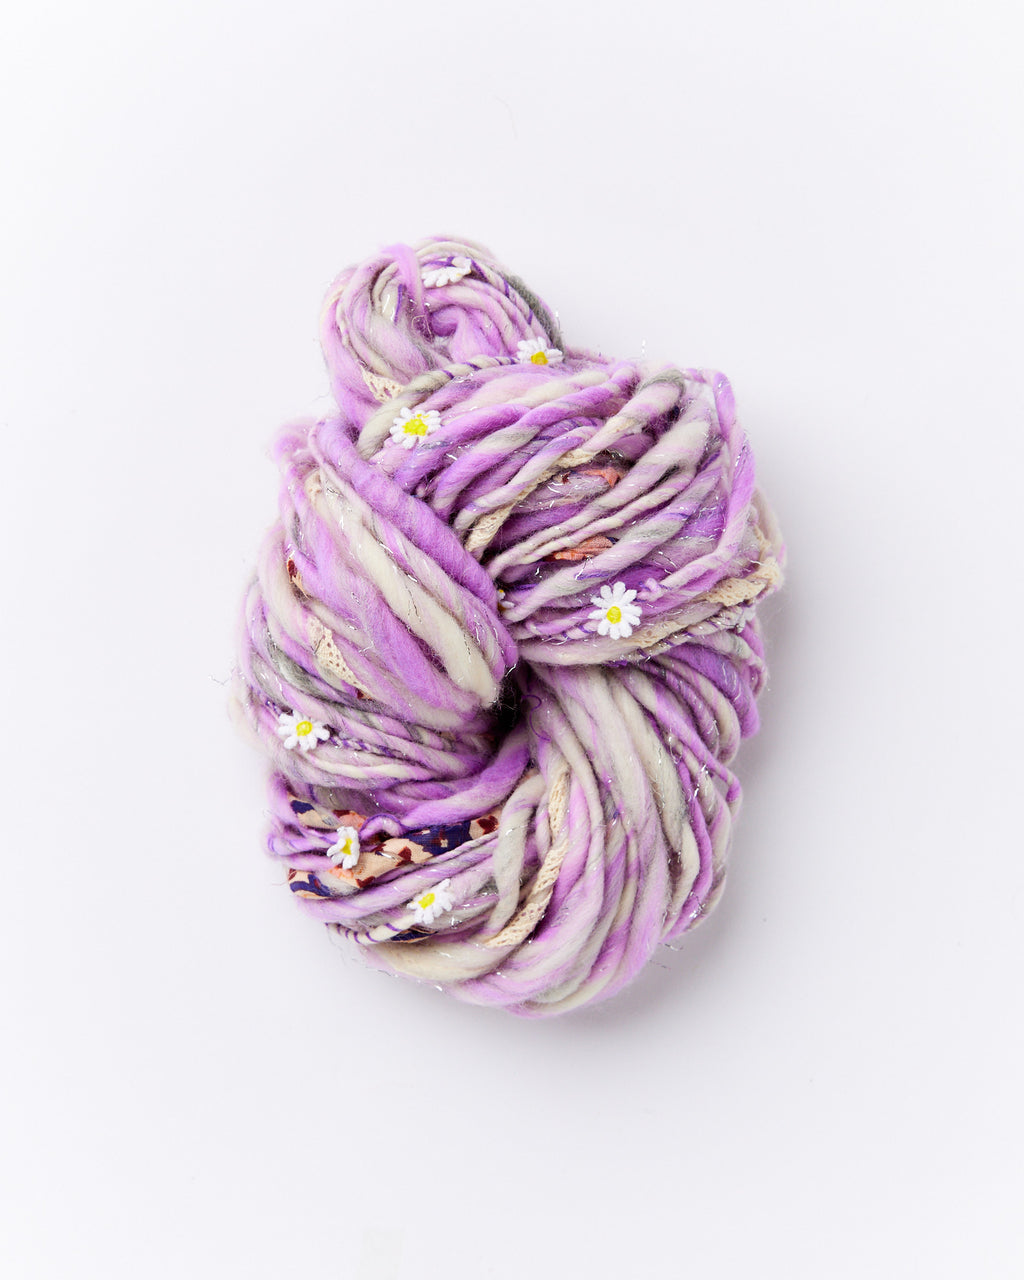 Daisy Chain Yarn in Cosmos Purple by Knit Collage - Chunky bulky Hand knitting yarn